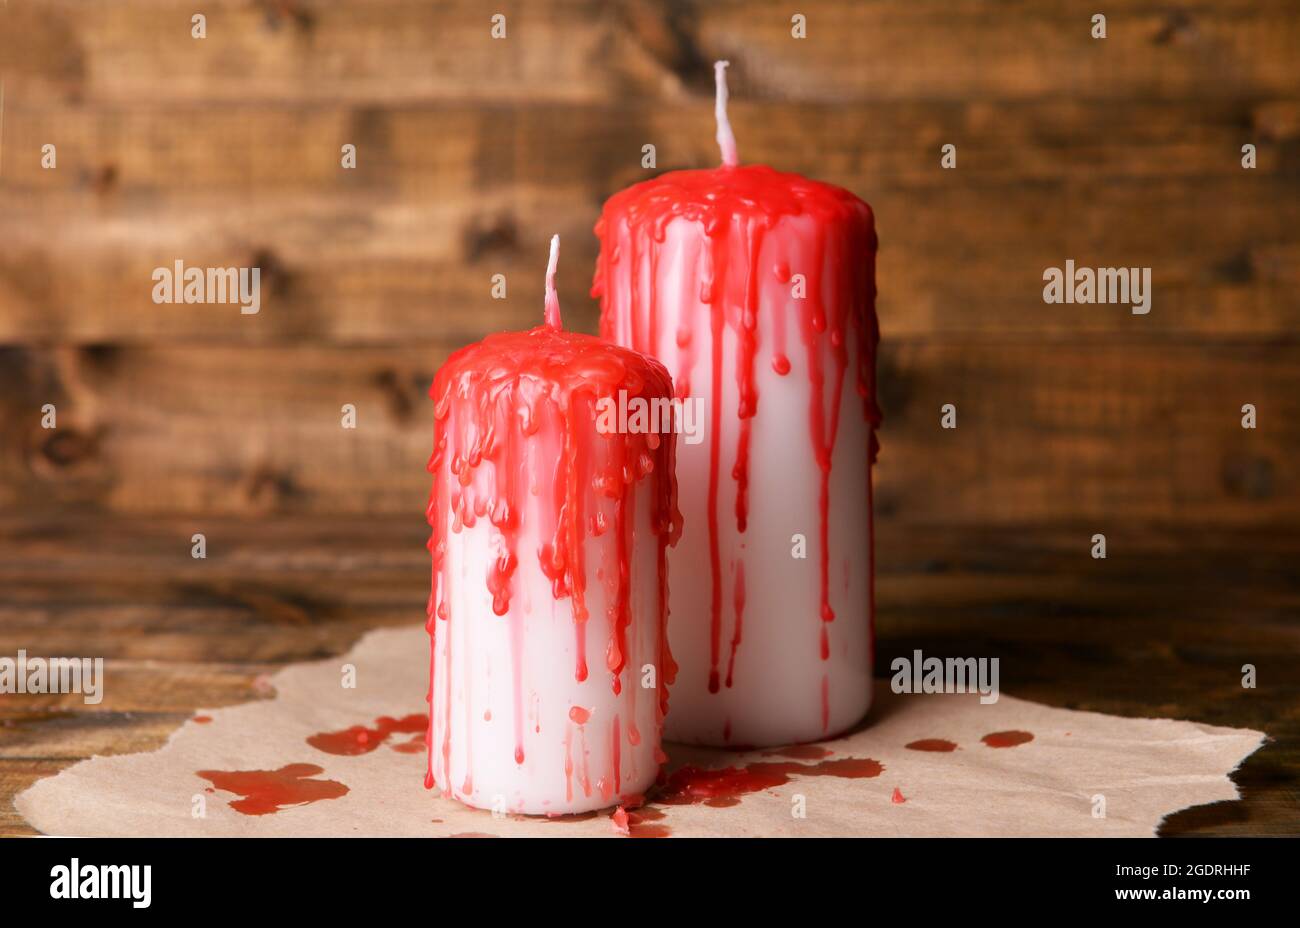 Melting Candle Wax Fotos e Imágenes de stock - Página 11 - Alamy